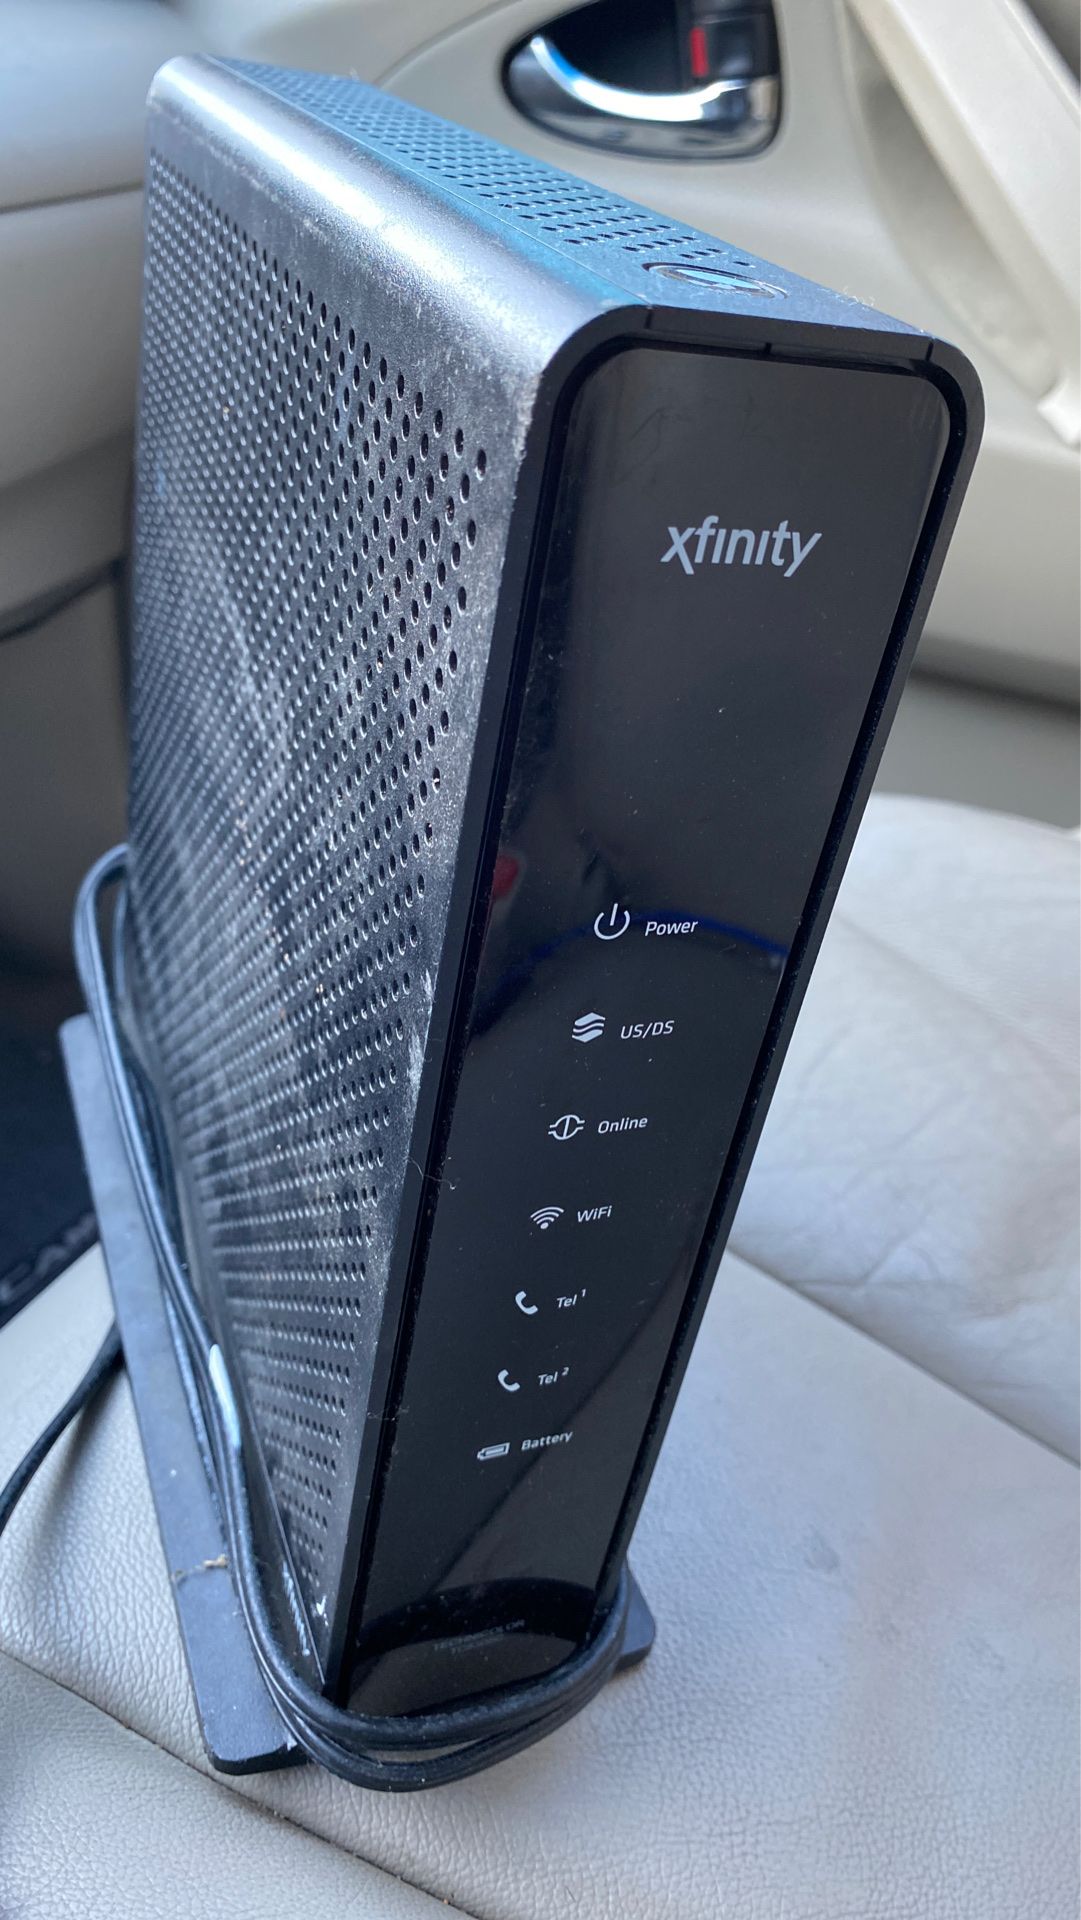 Xfinity cable wifi modem Works perfect